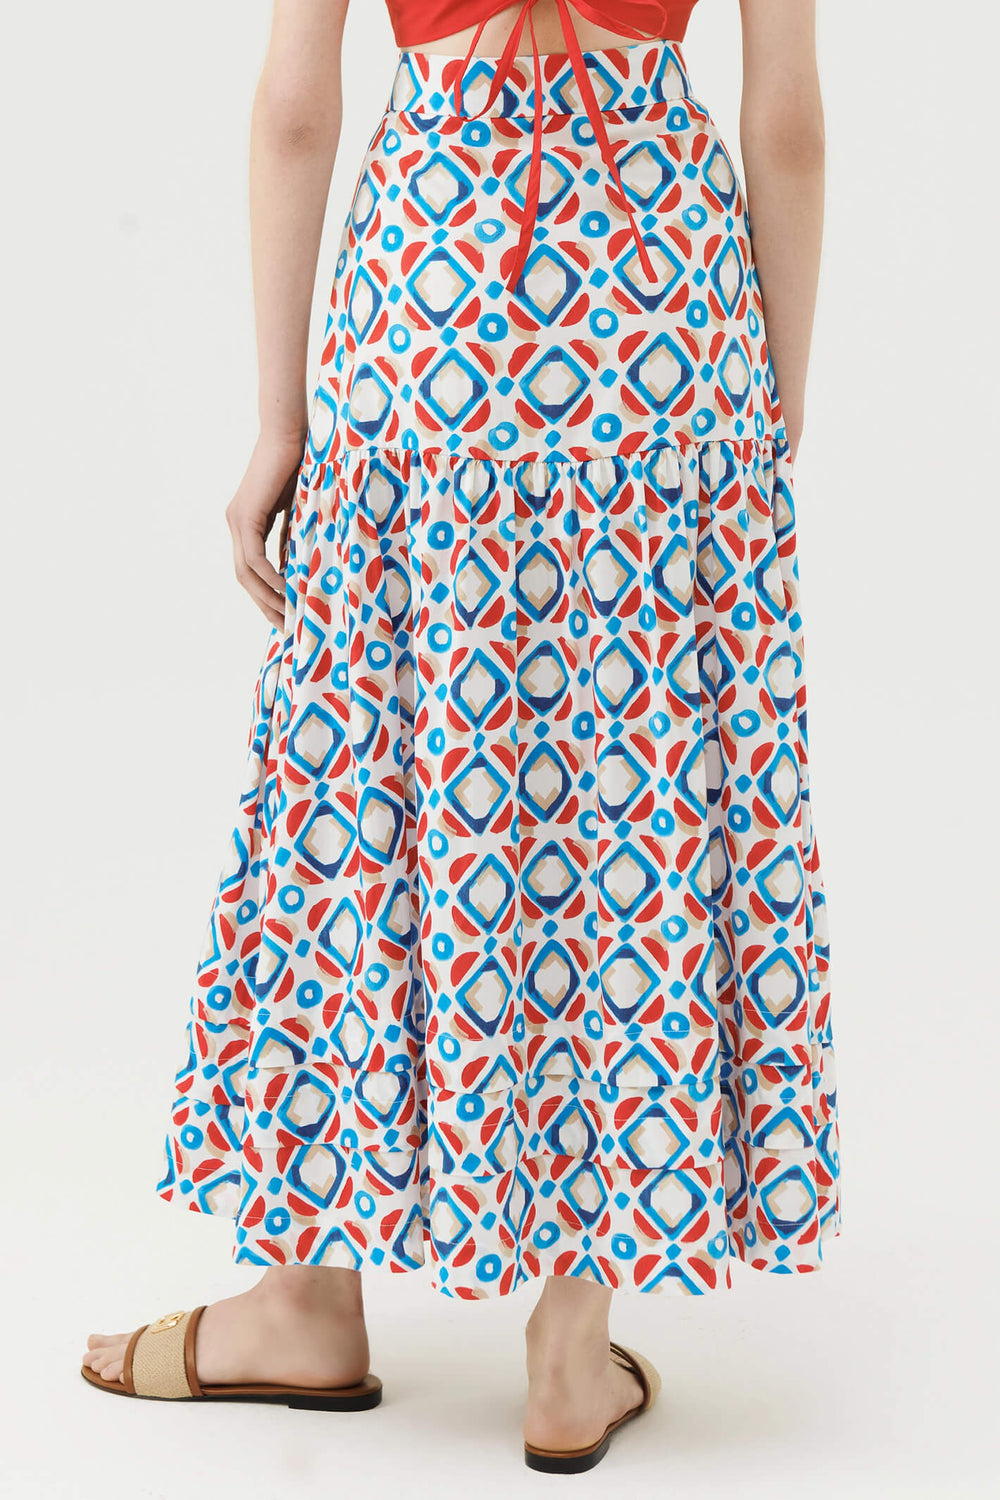 Marella Rodesia 2331010132200 Red Print Long Skirt - Olivia Grace Fashion